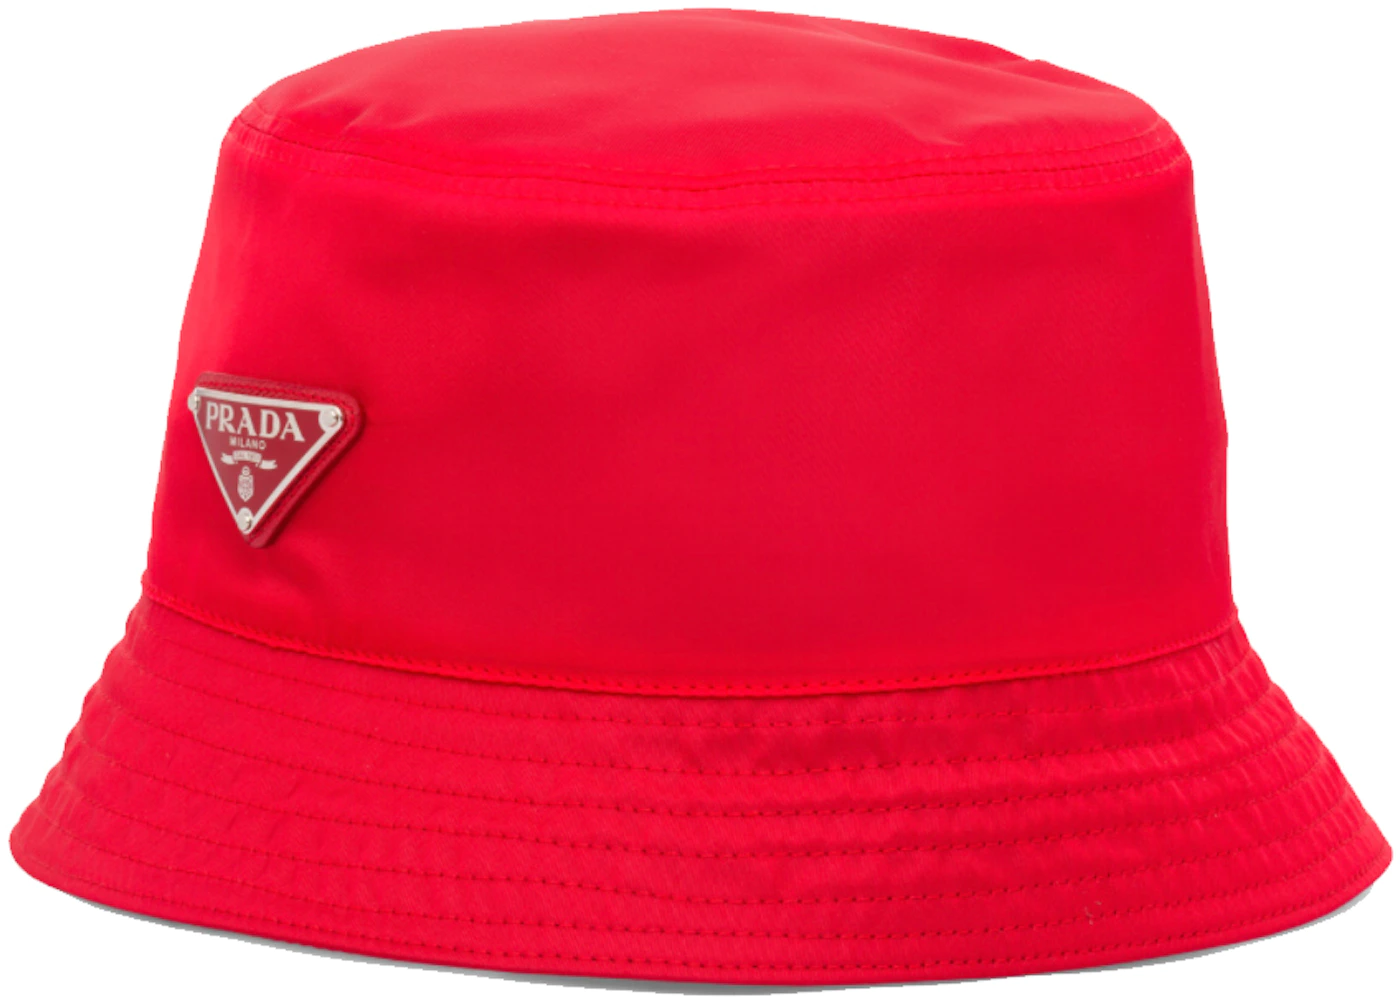 Prada Nylon Bucket Hat Red in Nylon with Silver-tone